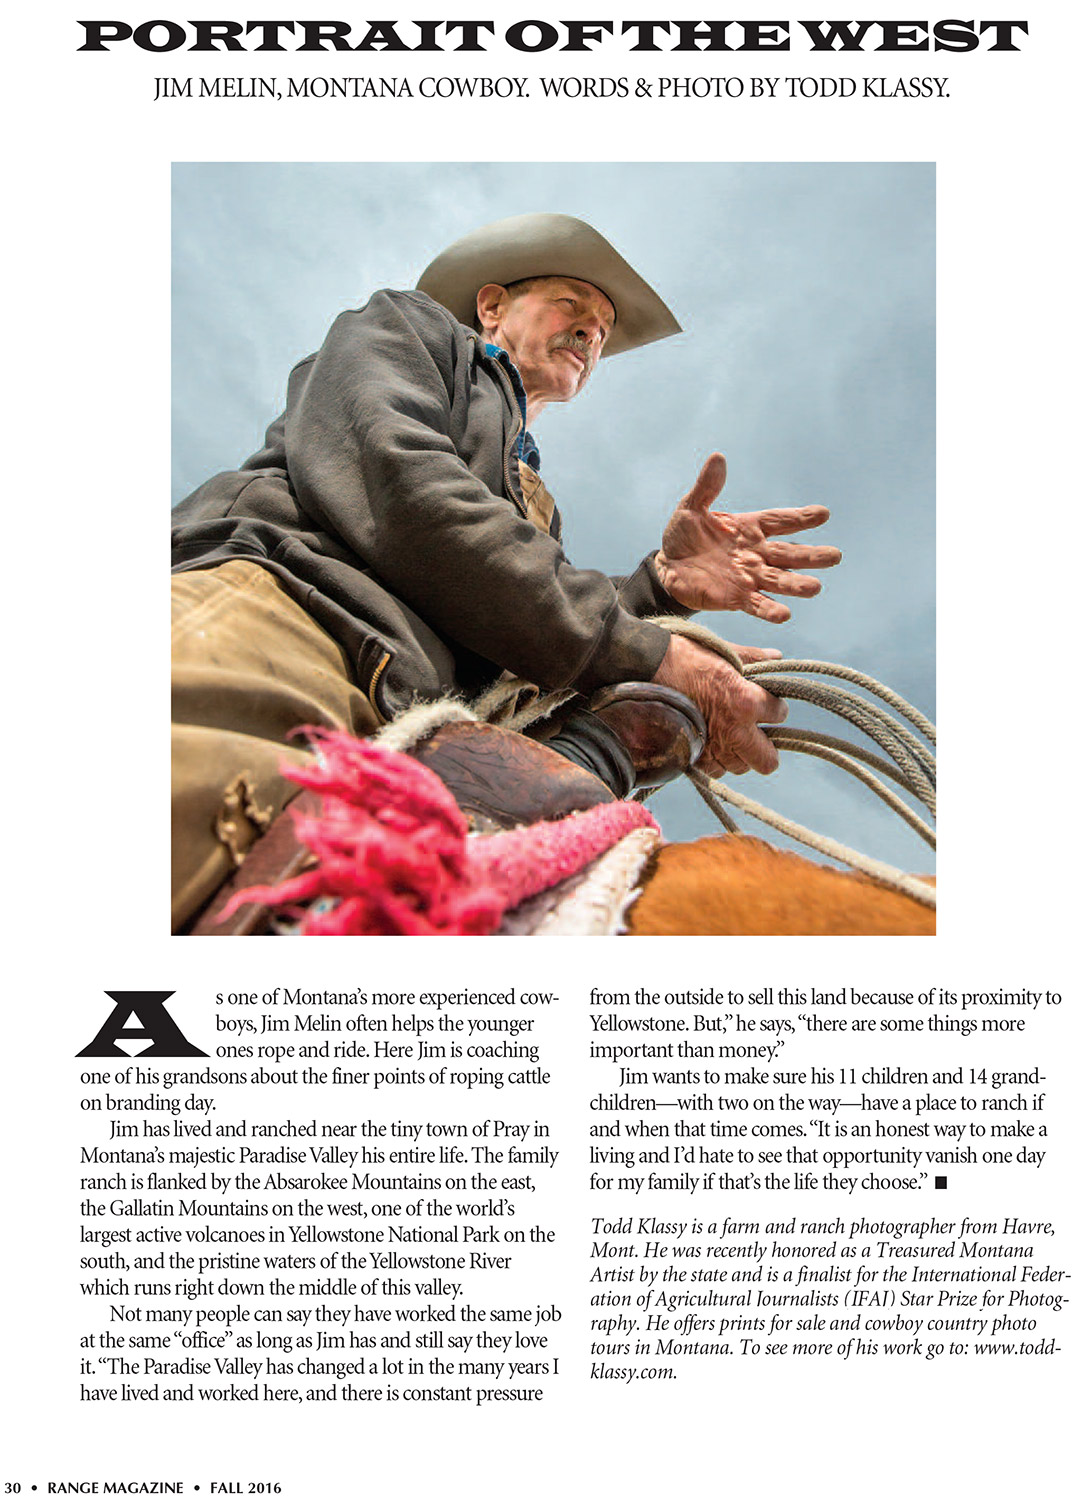 Portrait Photos of a Cowboy Appear in Range Magazine